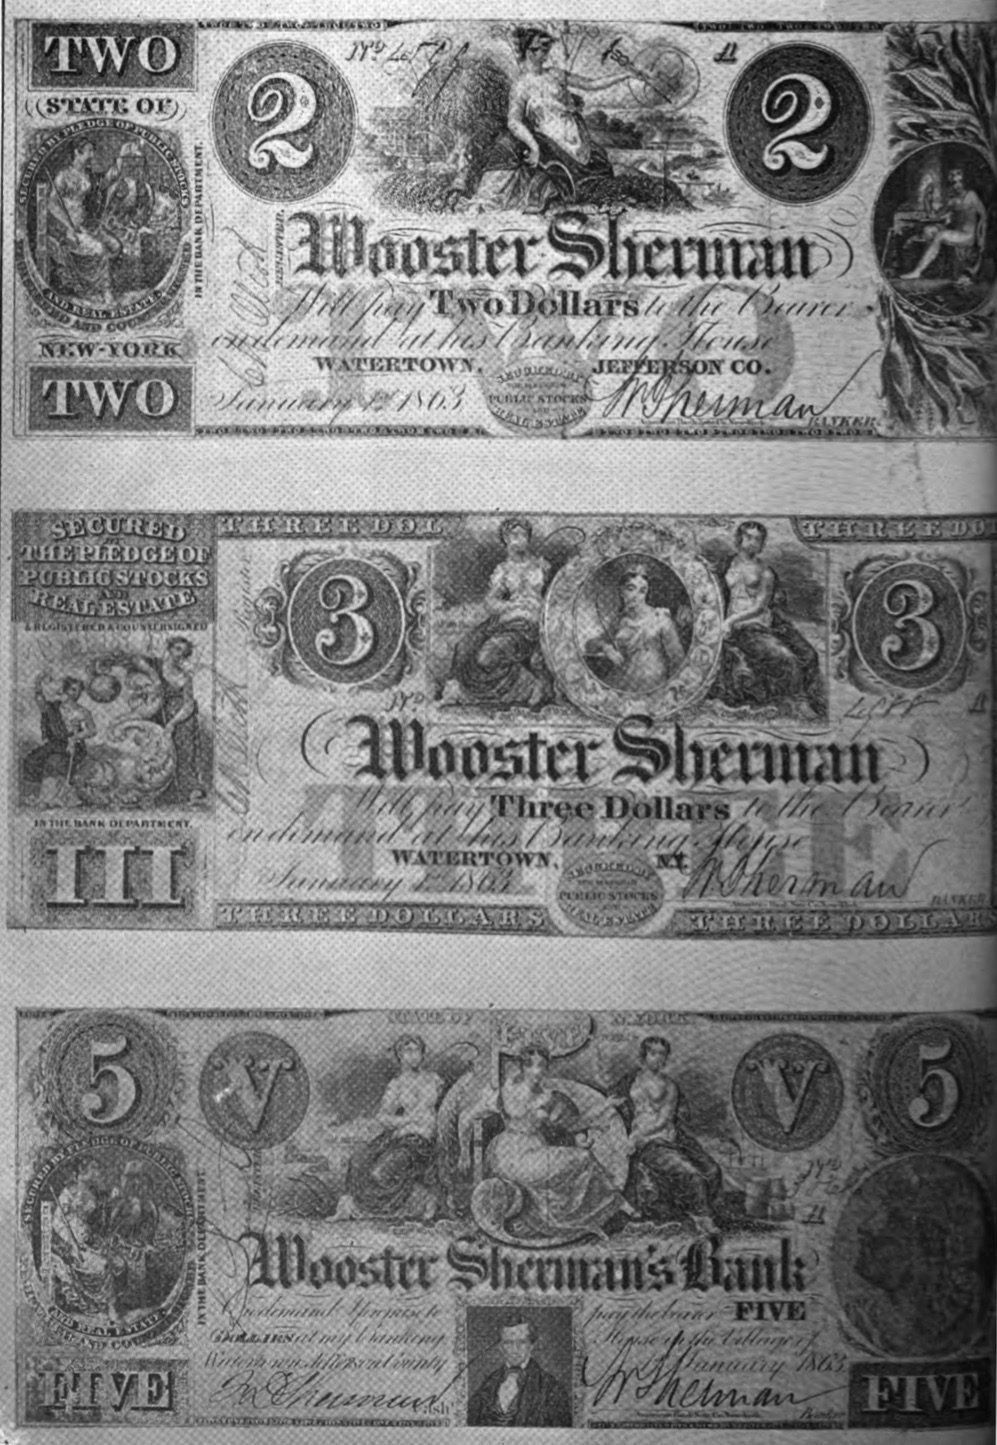 Wooster Sherman's Money